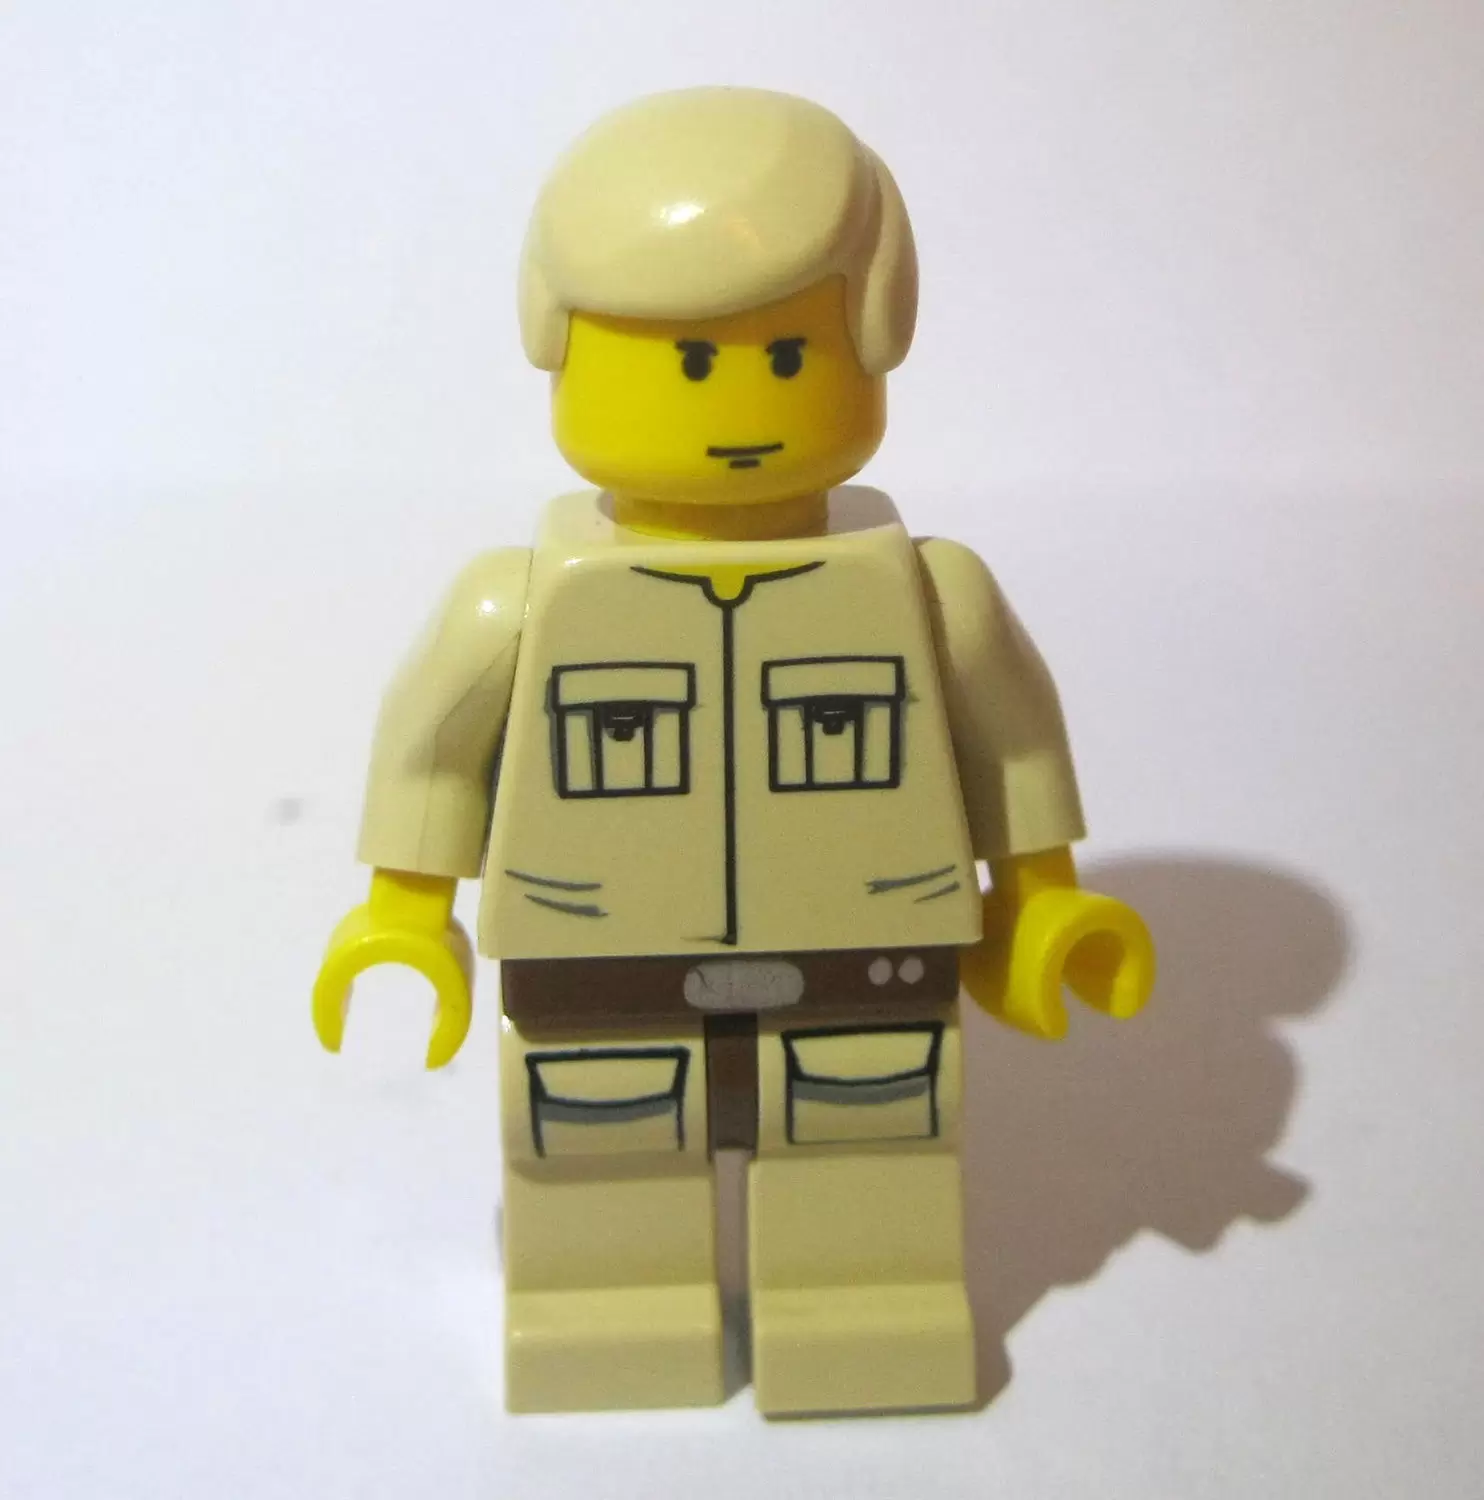 Klæbrig Tyggegummi læber Luke Skywalker with Cloud City Outfit - Minifigurines LEGO Star Wars SW0103